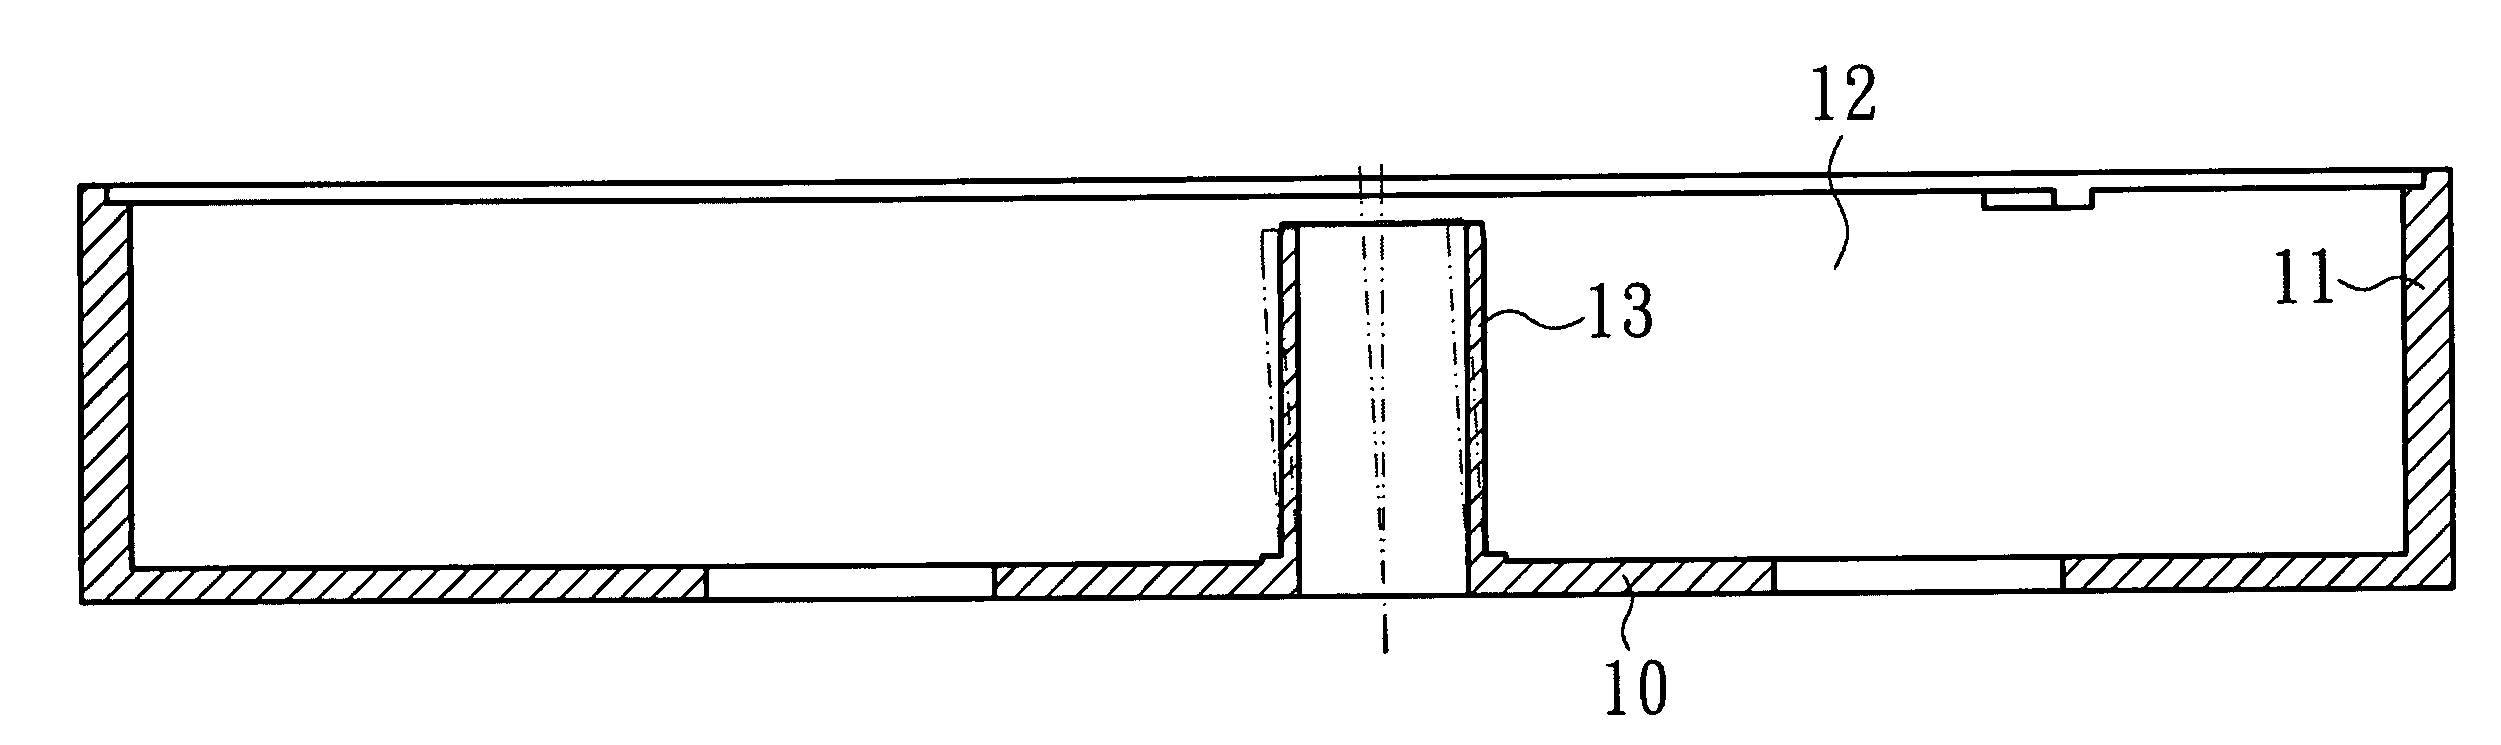 Base design of cooling structure